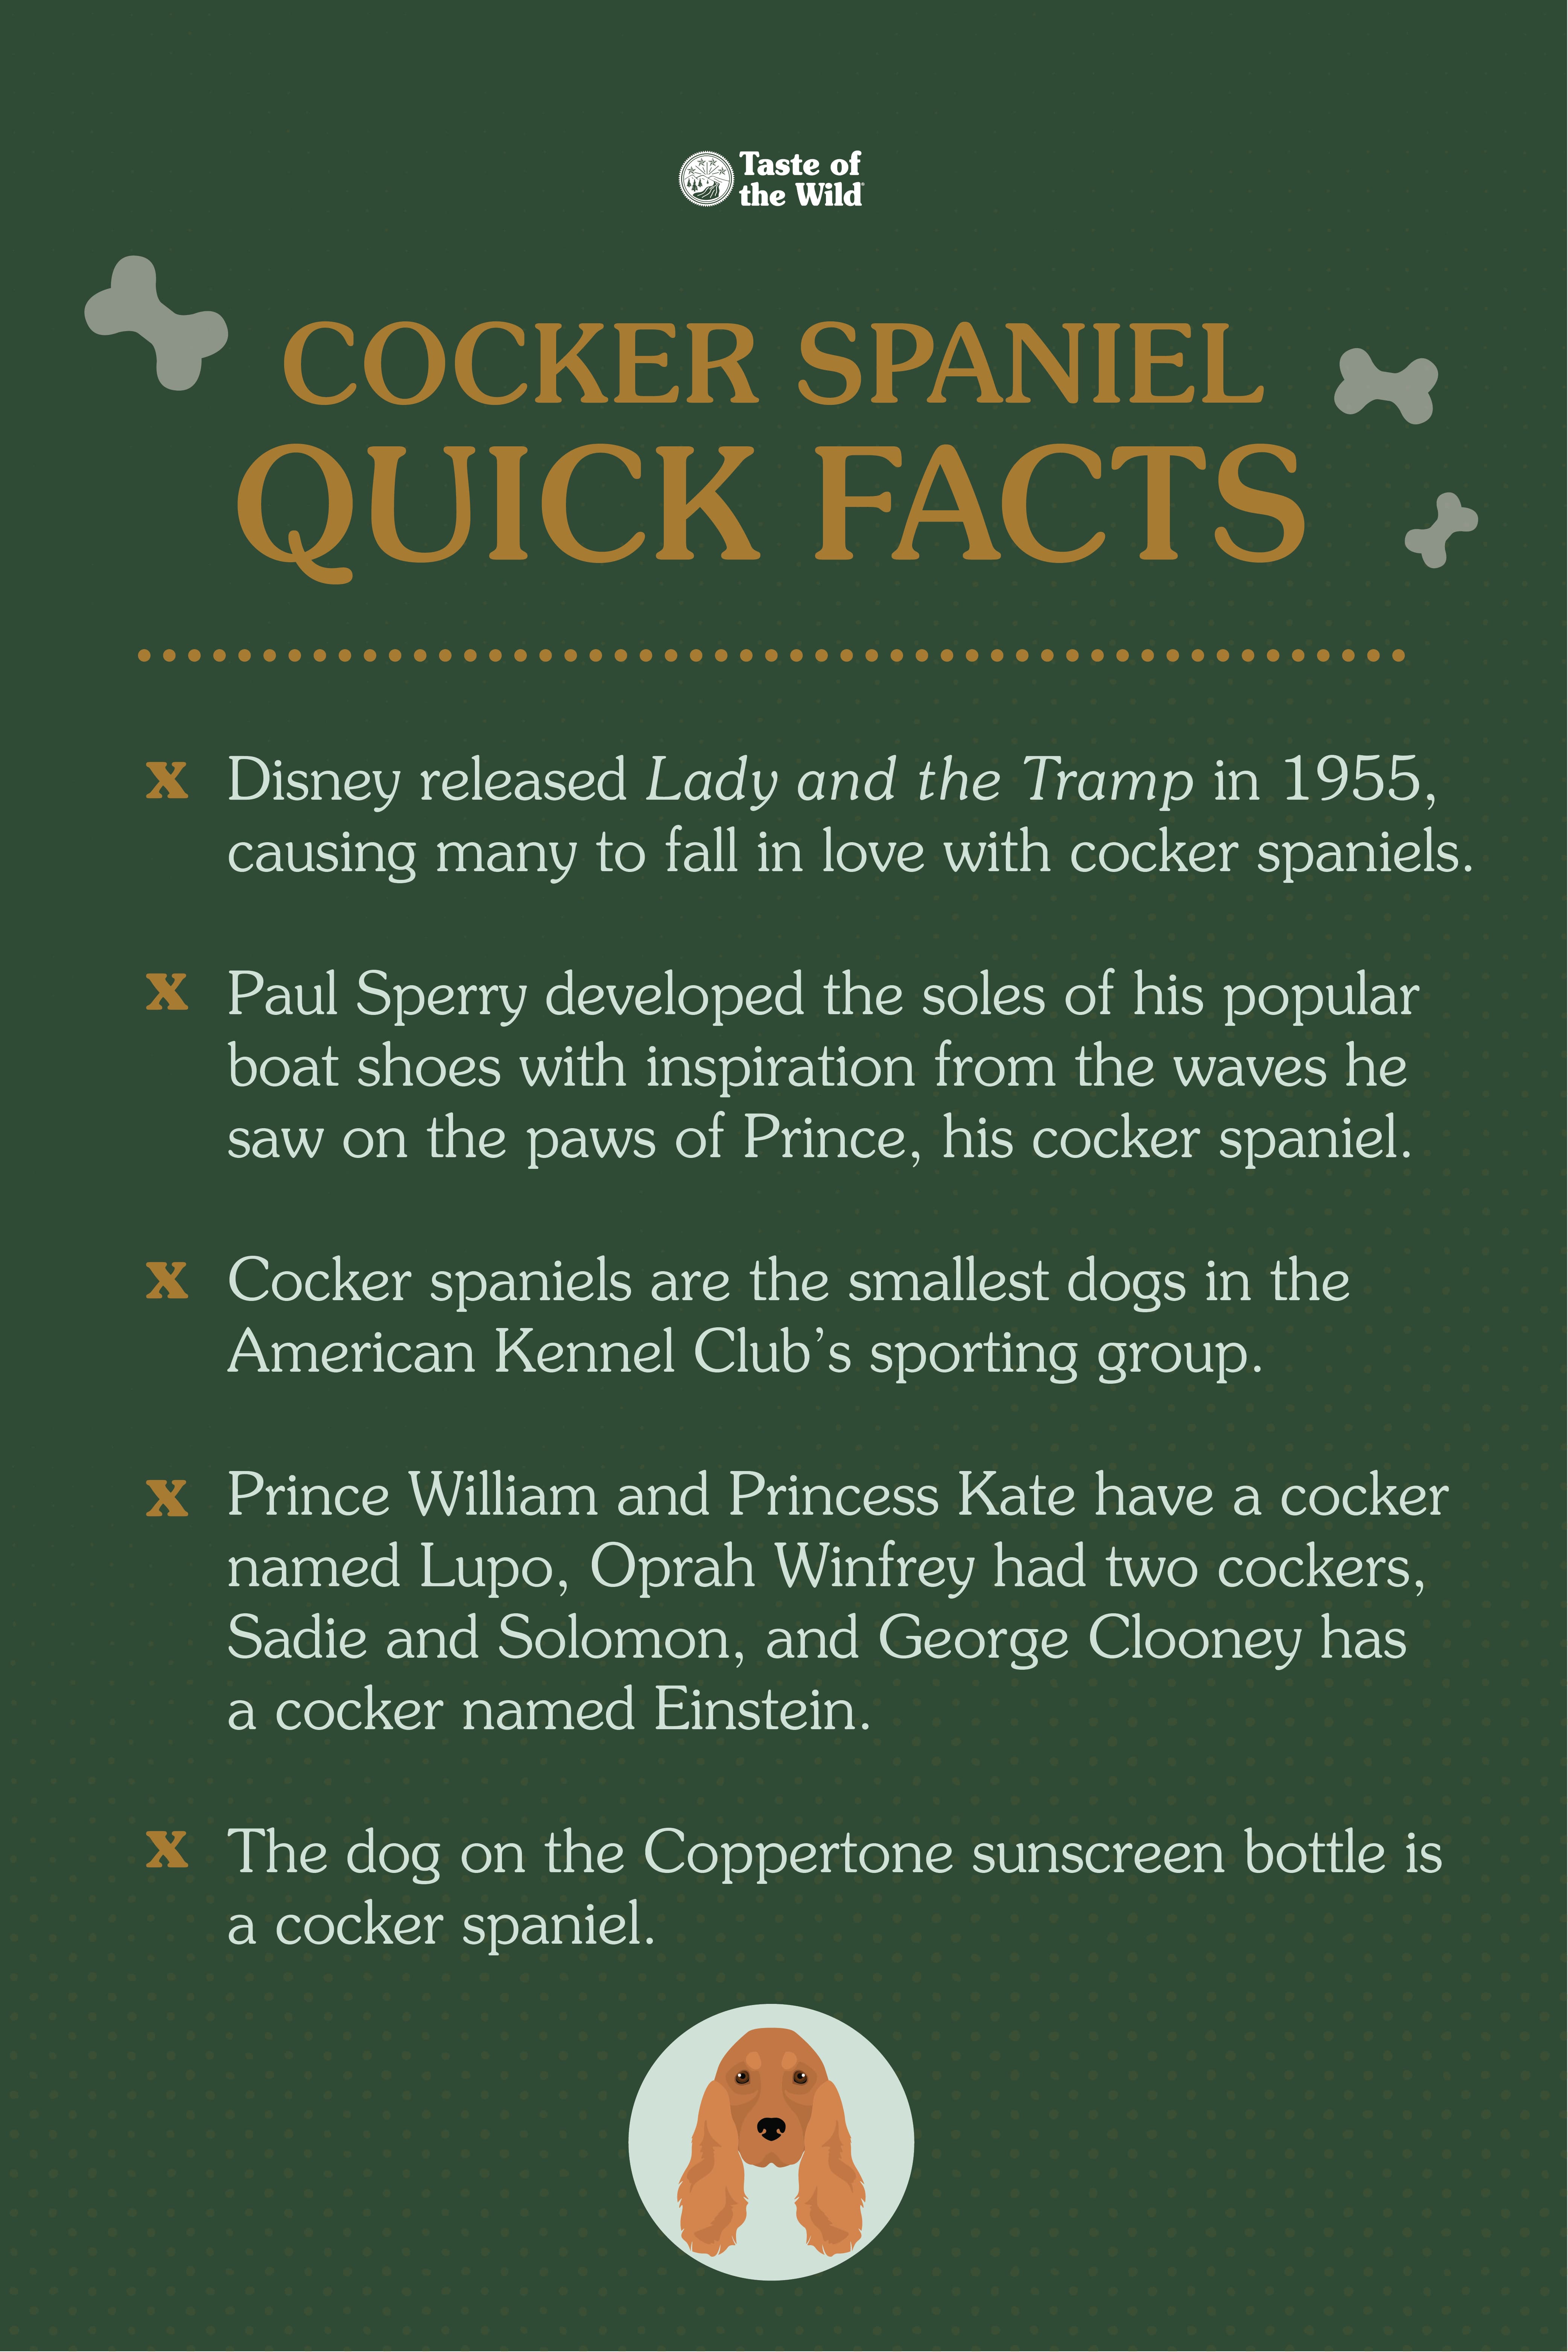 Cocker spaniel quick facts. | Taste of the Wild